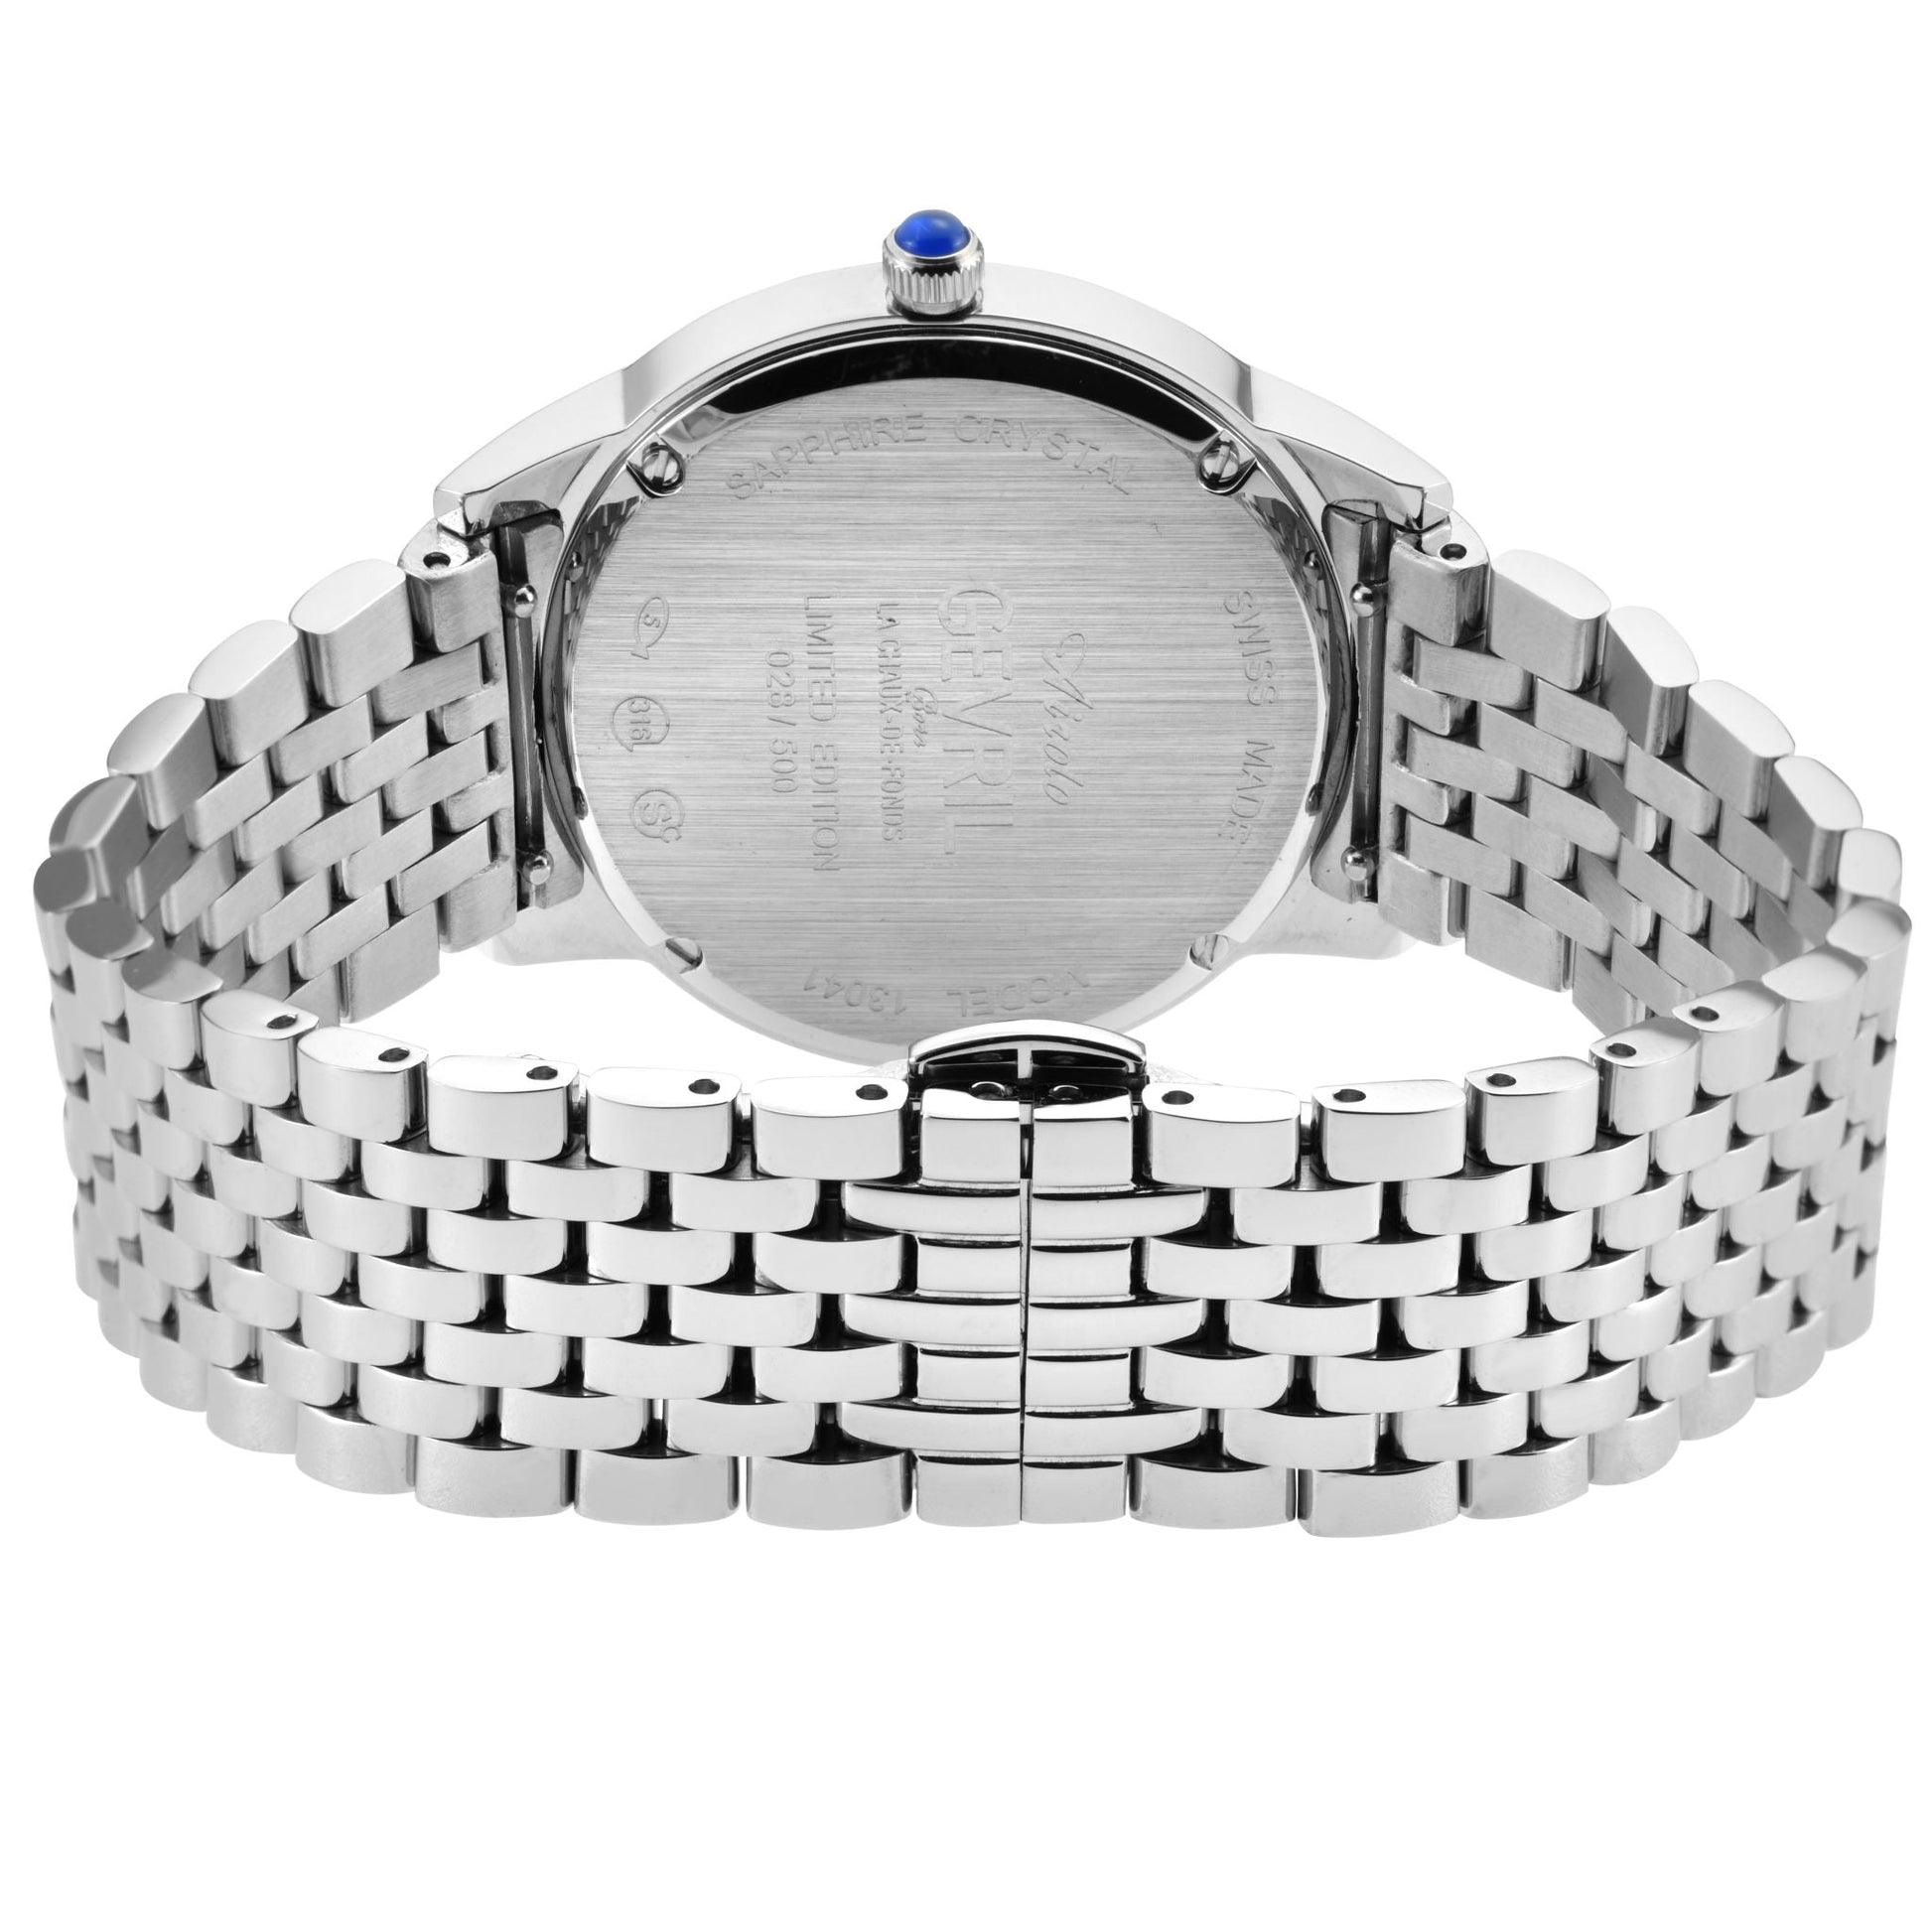 Gevril-Luxury-Swiss-Watches-Gevril Airolo - Diamond-13041B